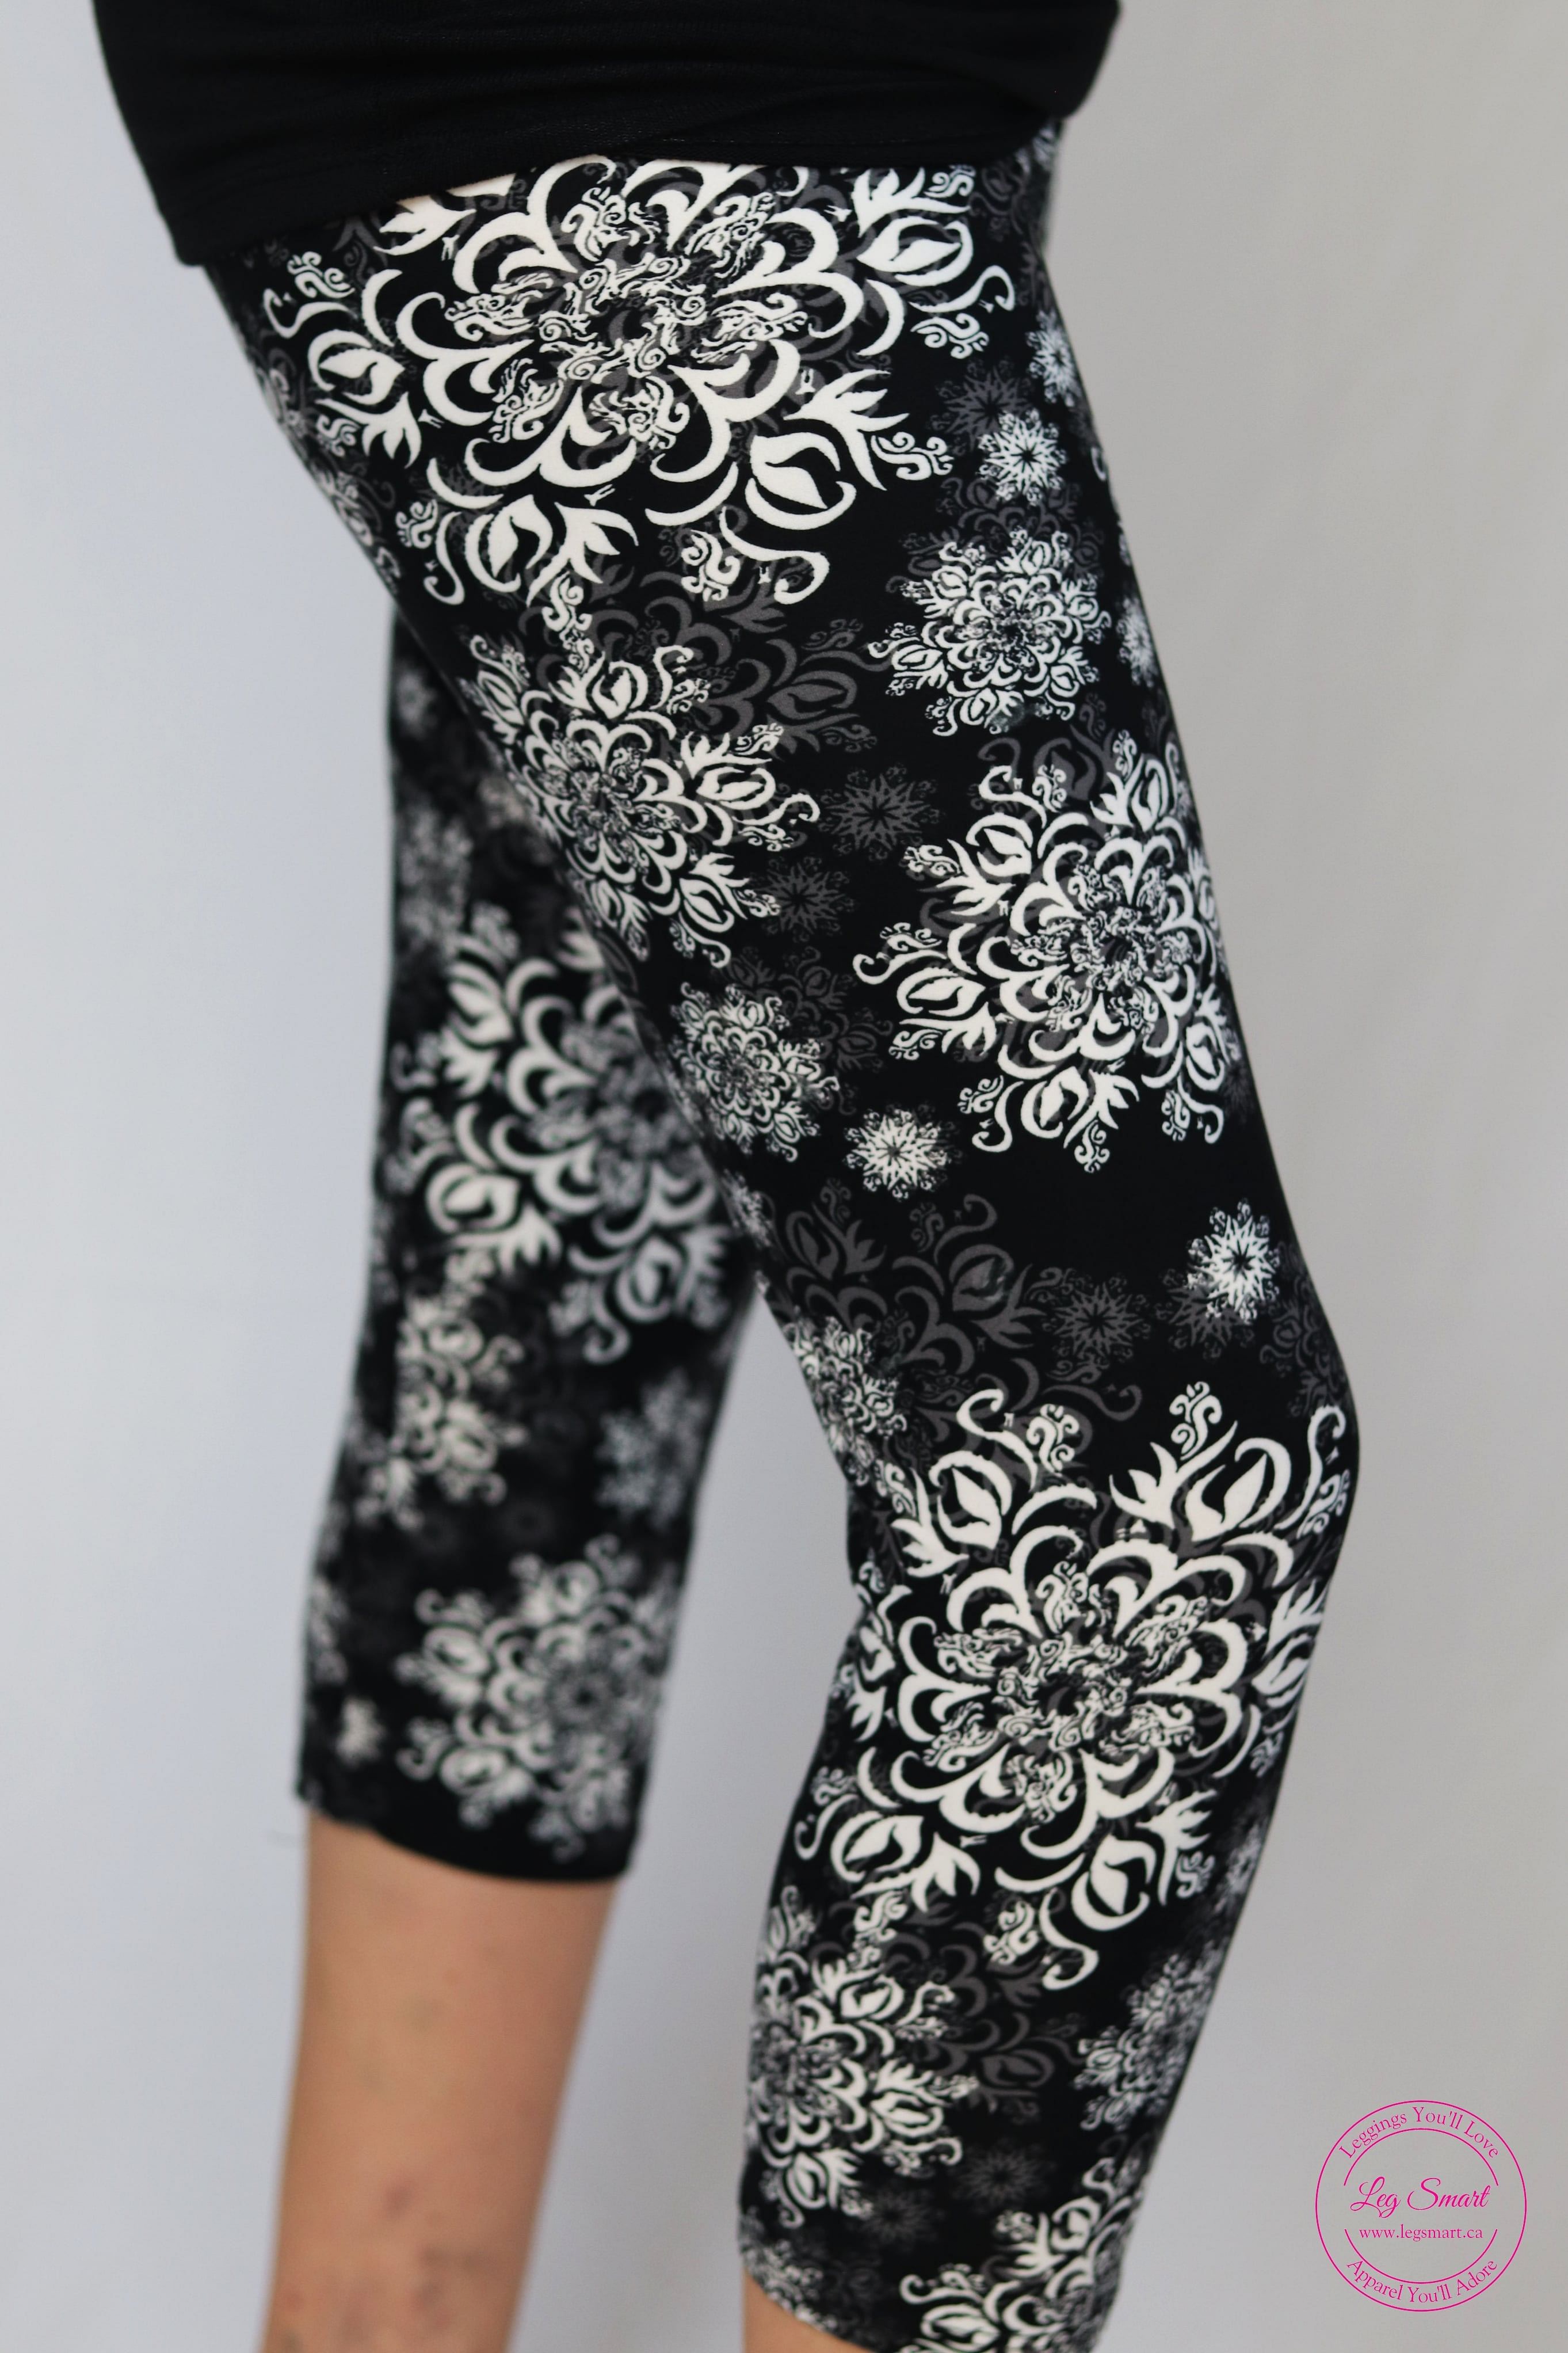 Aggregate 257+ black and white capri leggings latest